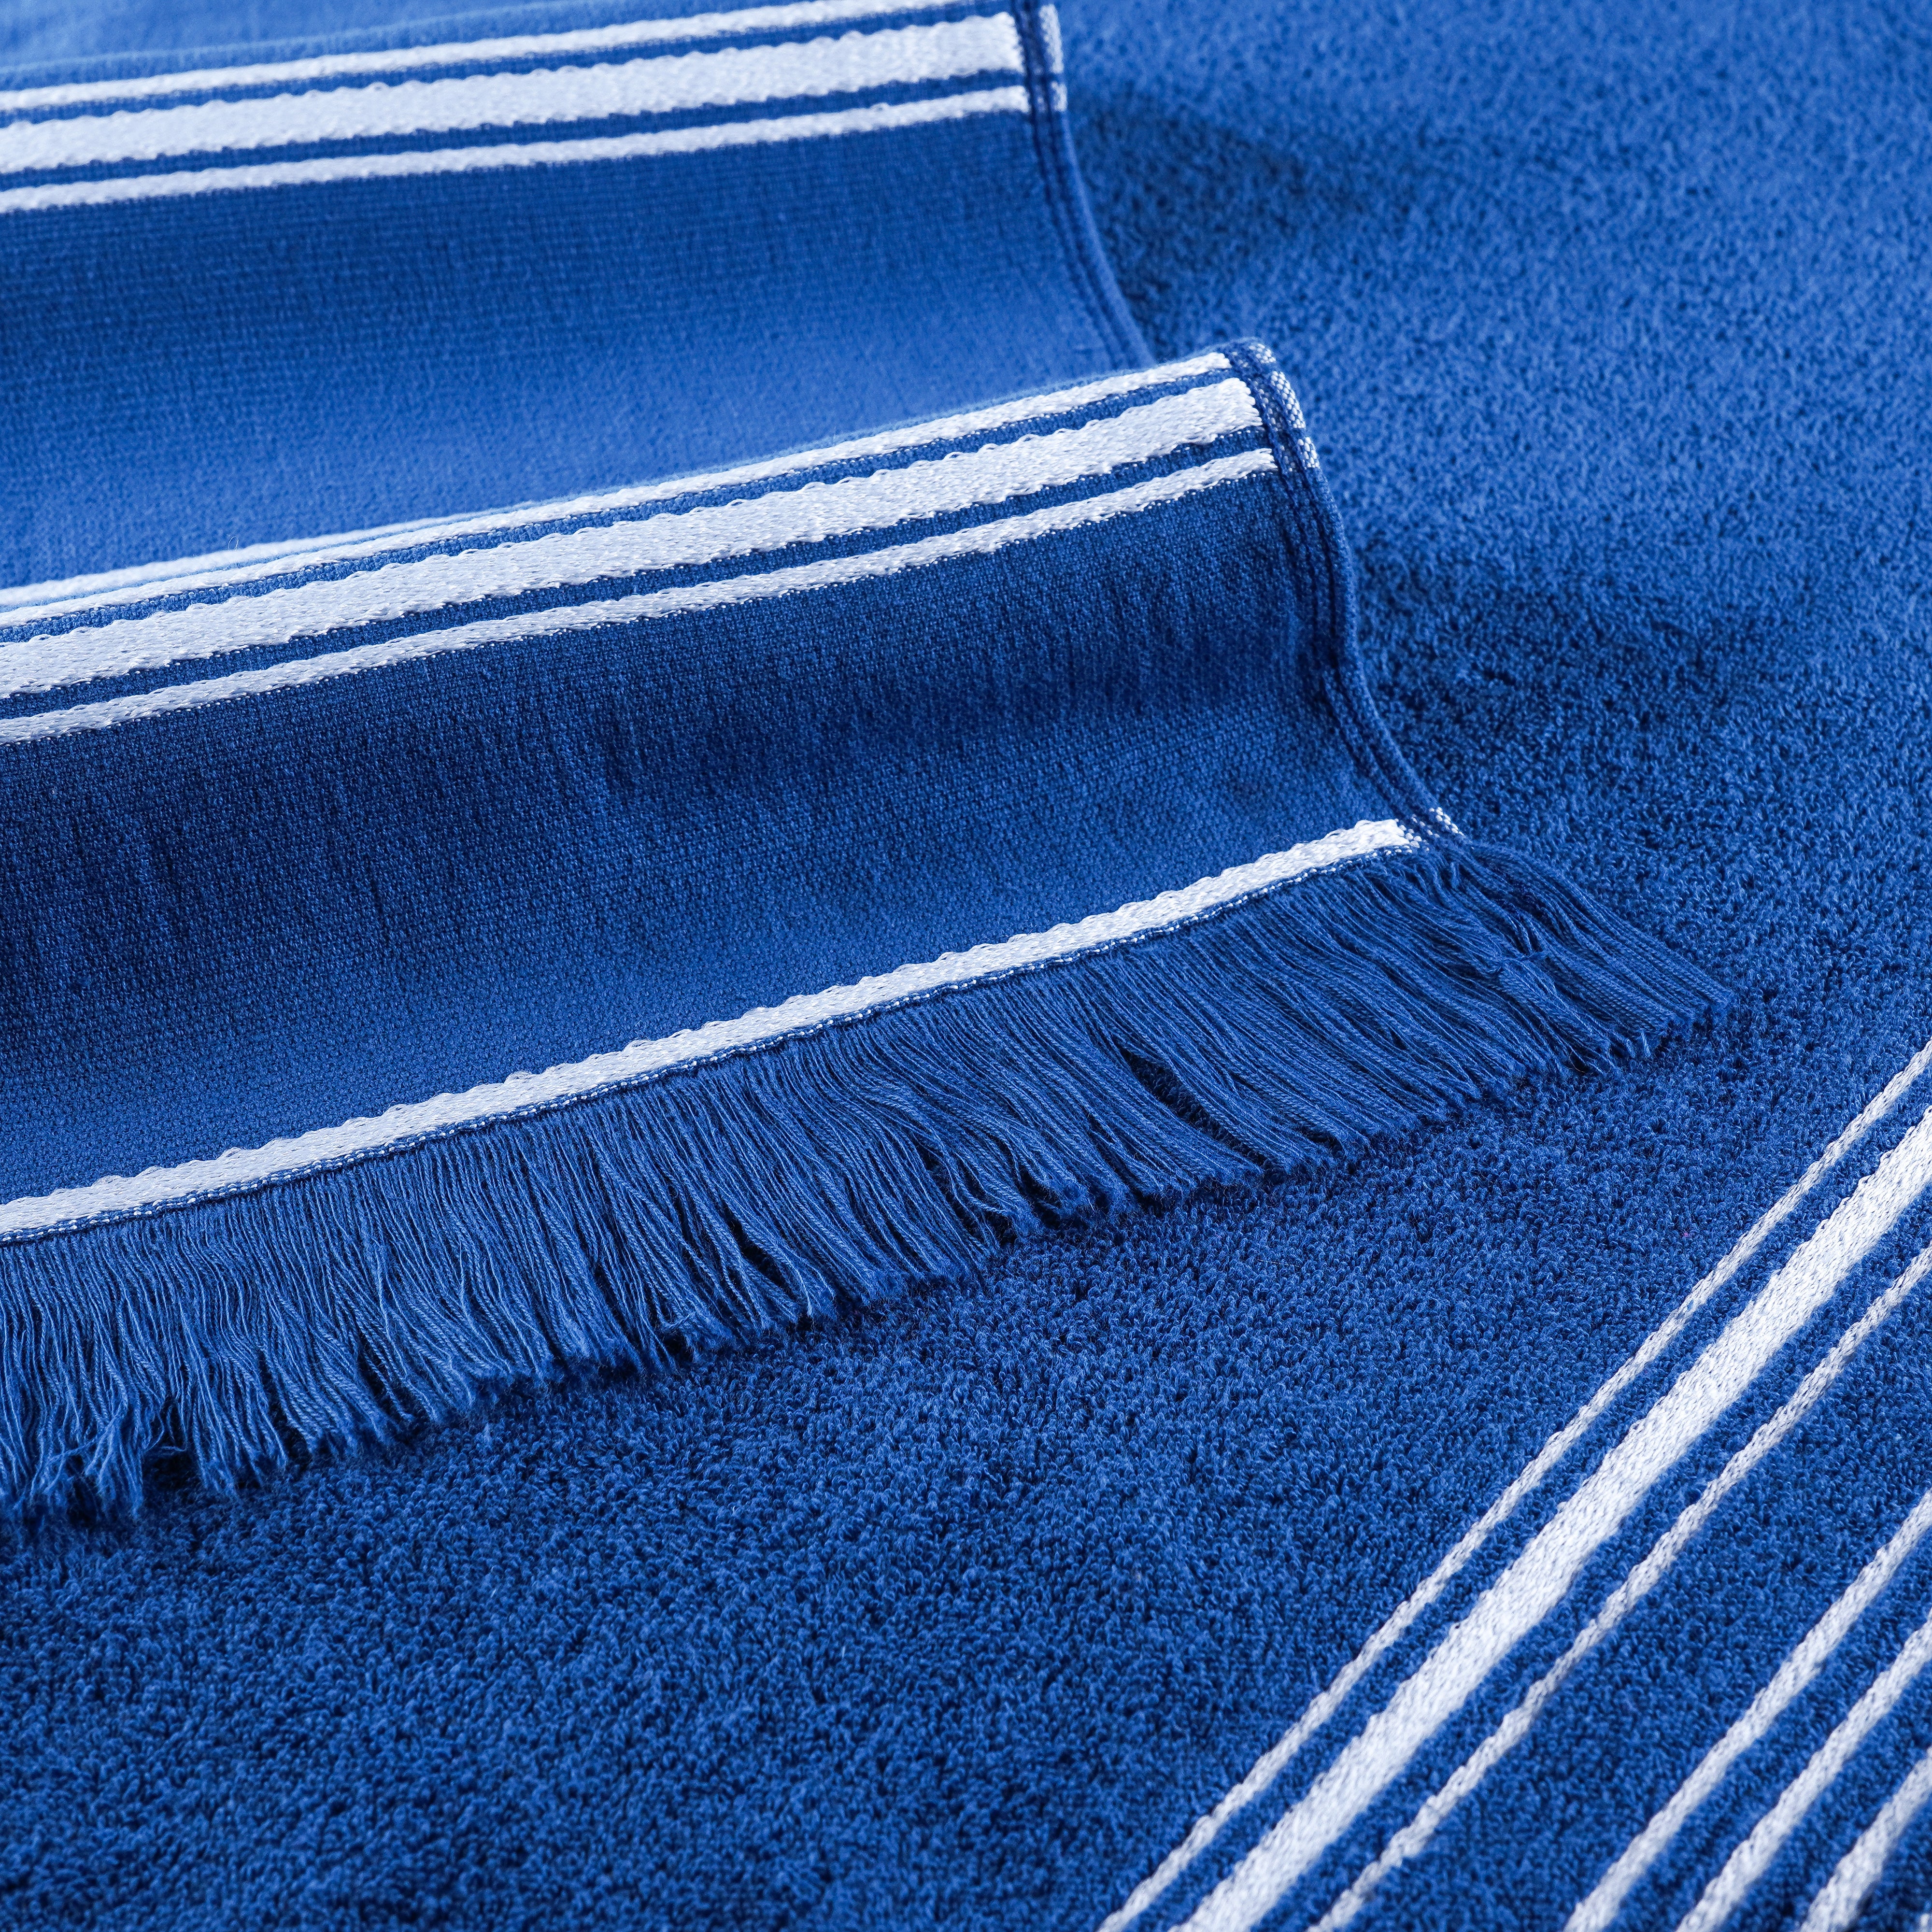 Antalya Beach Towel - Classic Blue